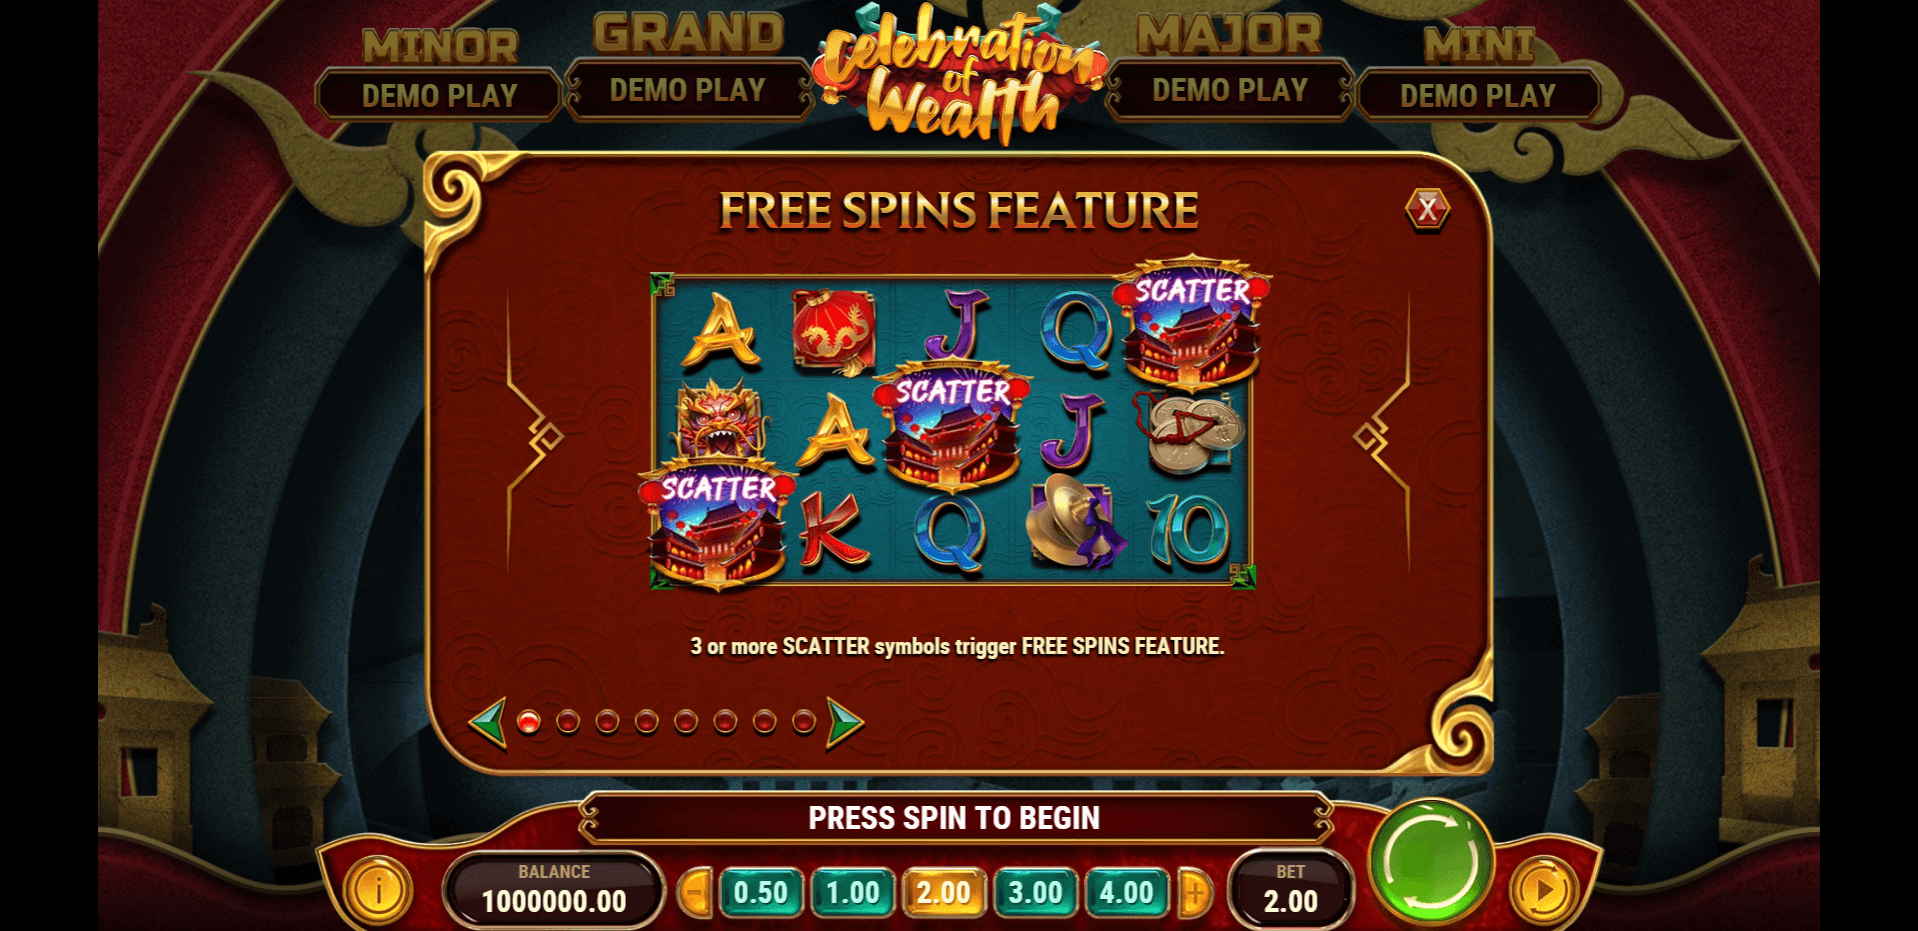 celebration of wealth slot machine detail image 0